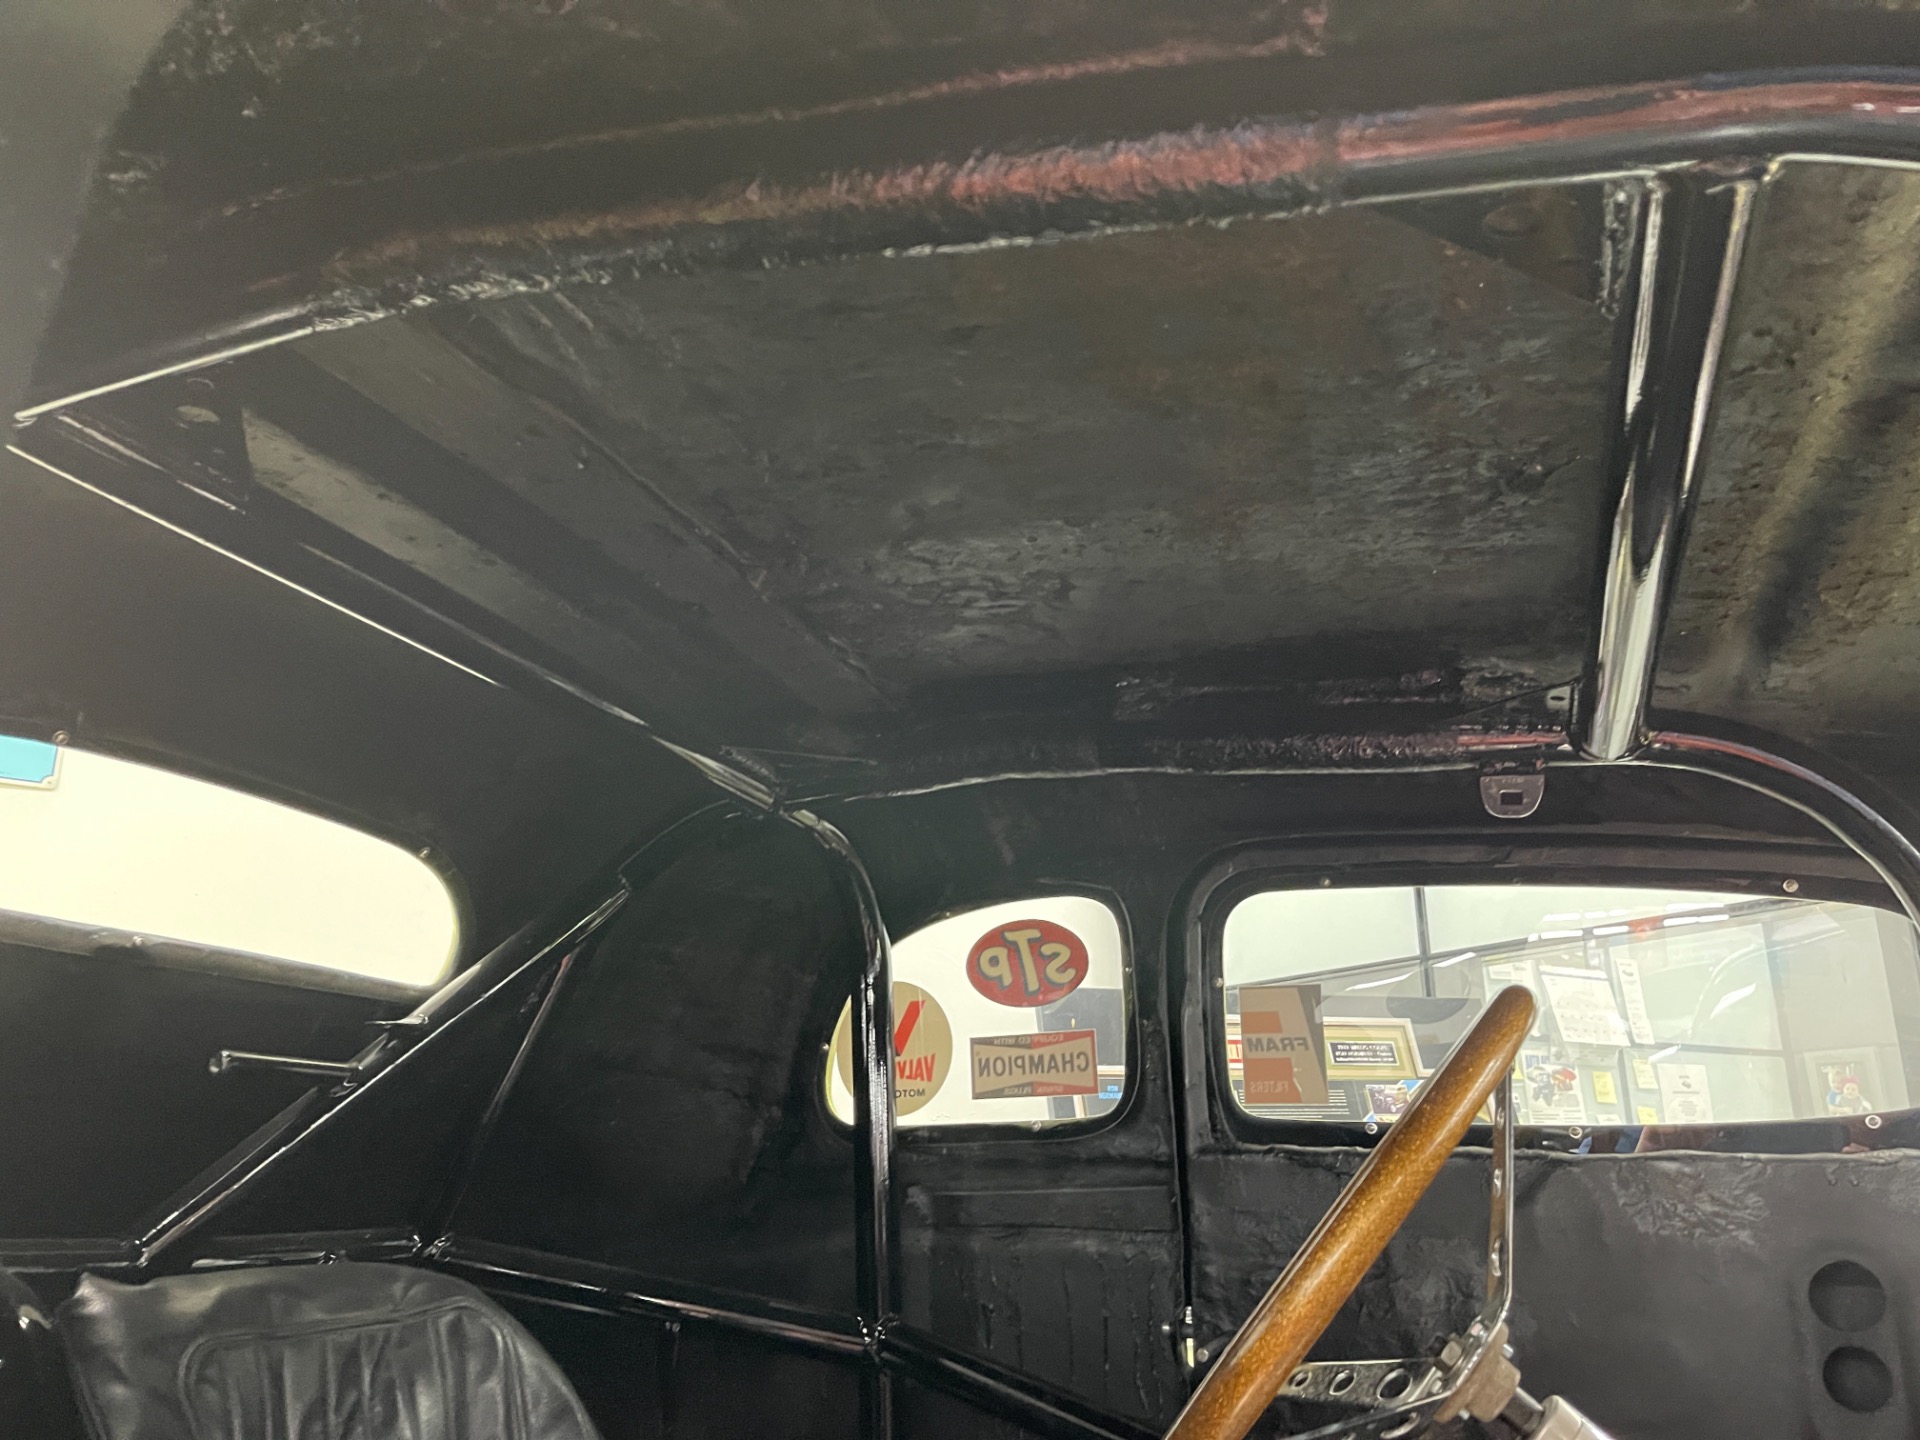 Used 1933 Willys Coupe - JACK MERKEL CHAMPIONSHIP CAR - AA/GS CHAMPION - | Mundelein, IL